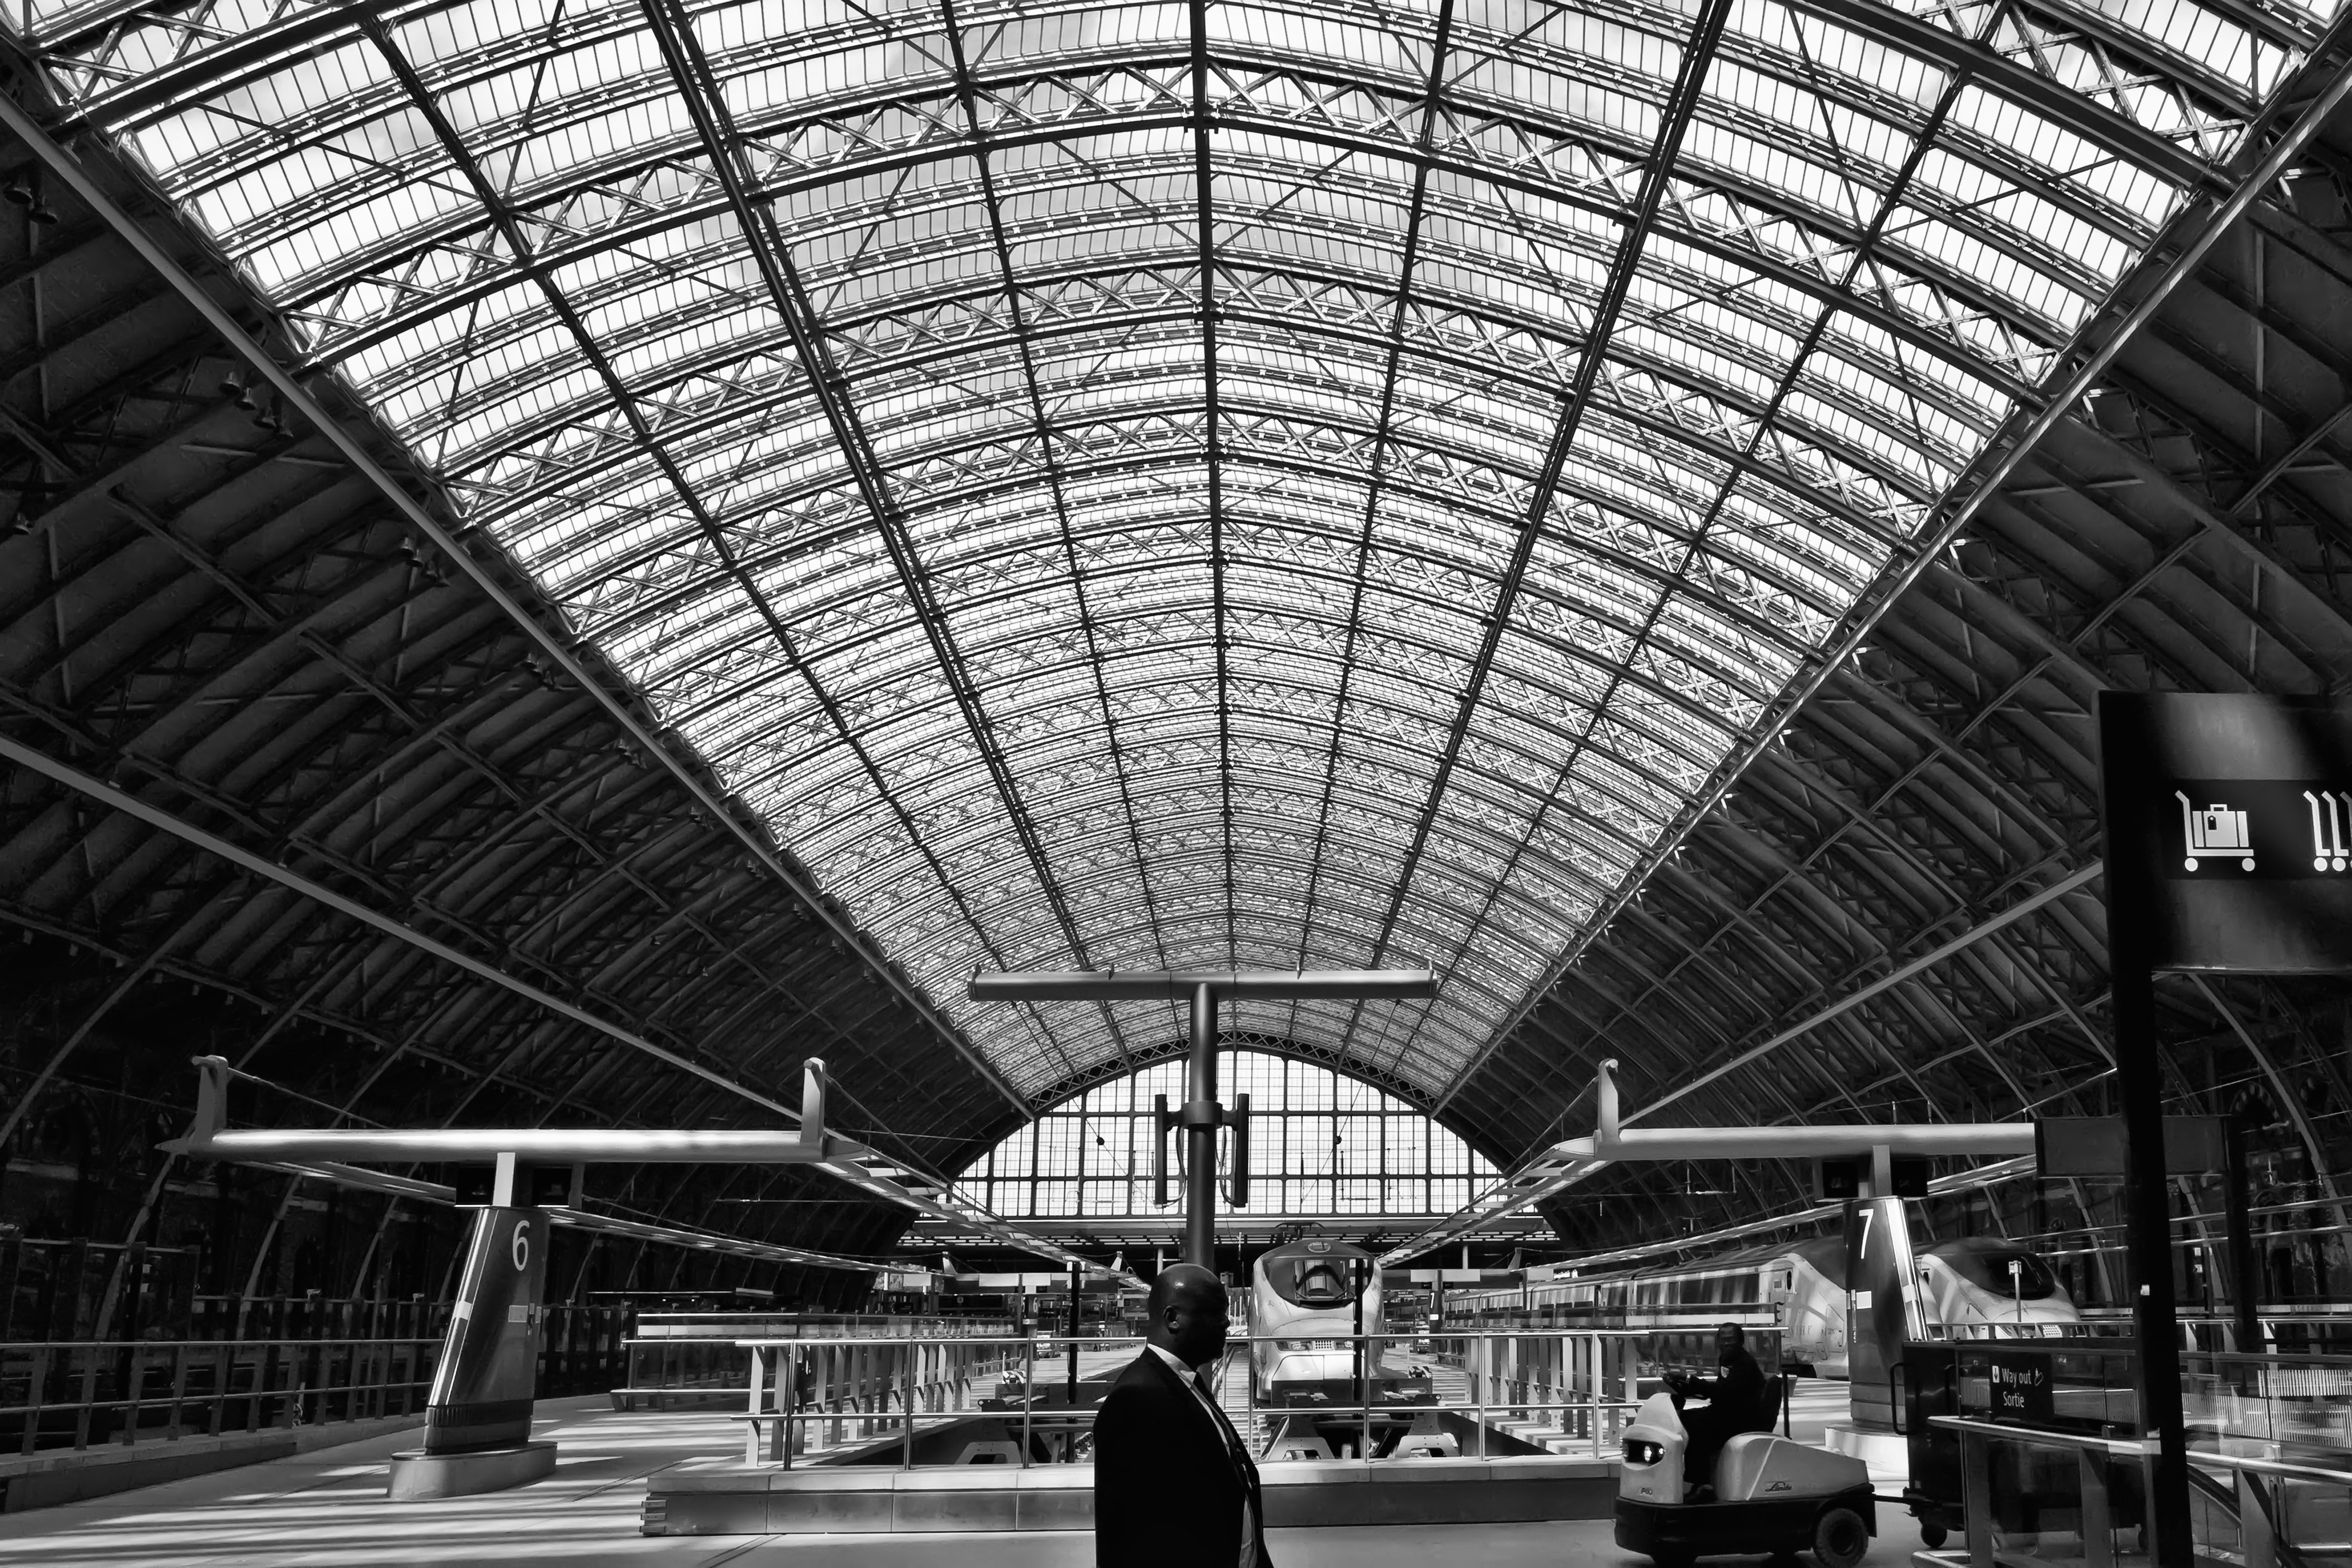 Off the Train, Architecture, Black, Bogaert, London, HQ Photo